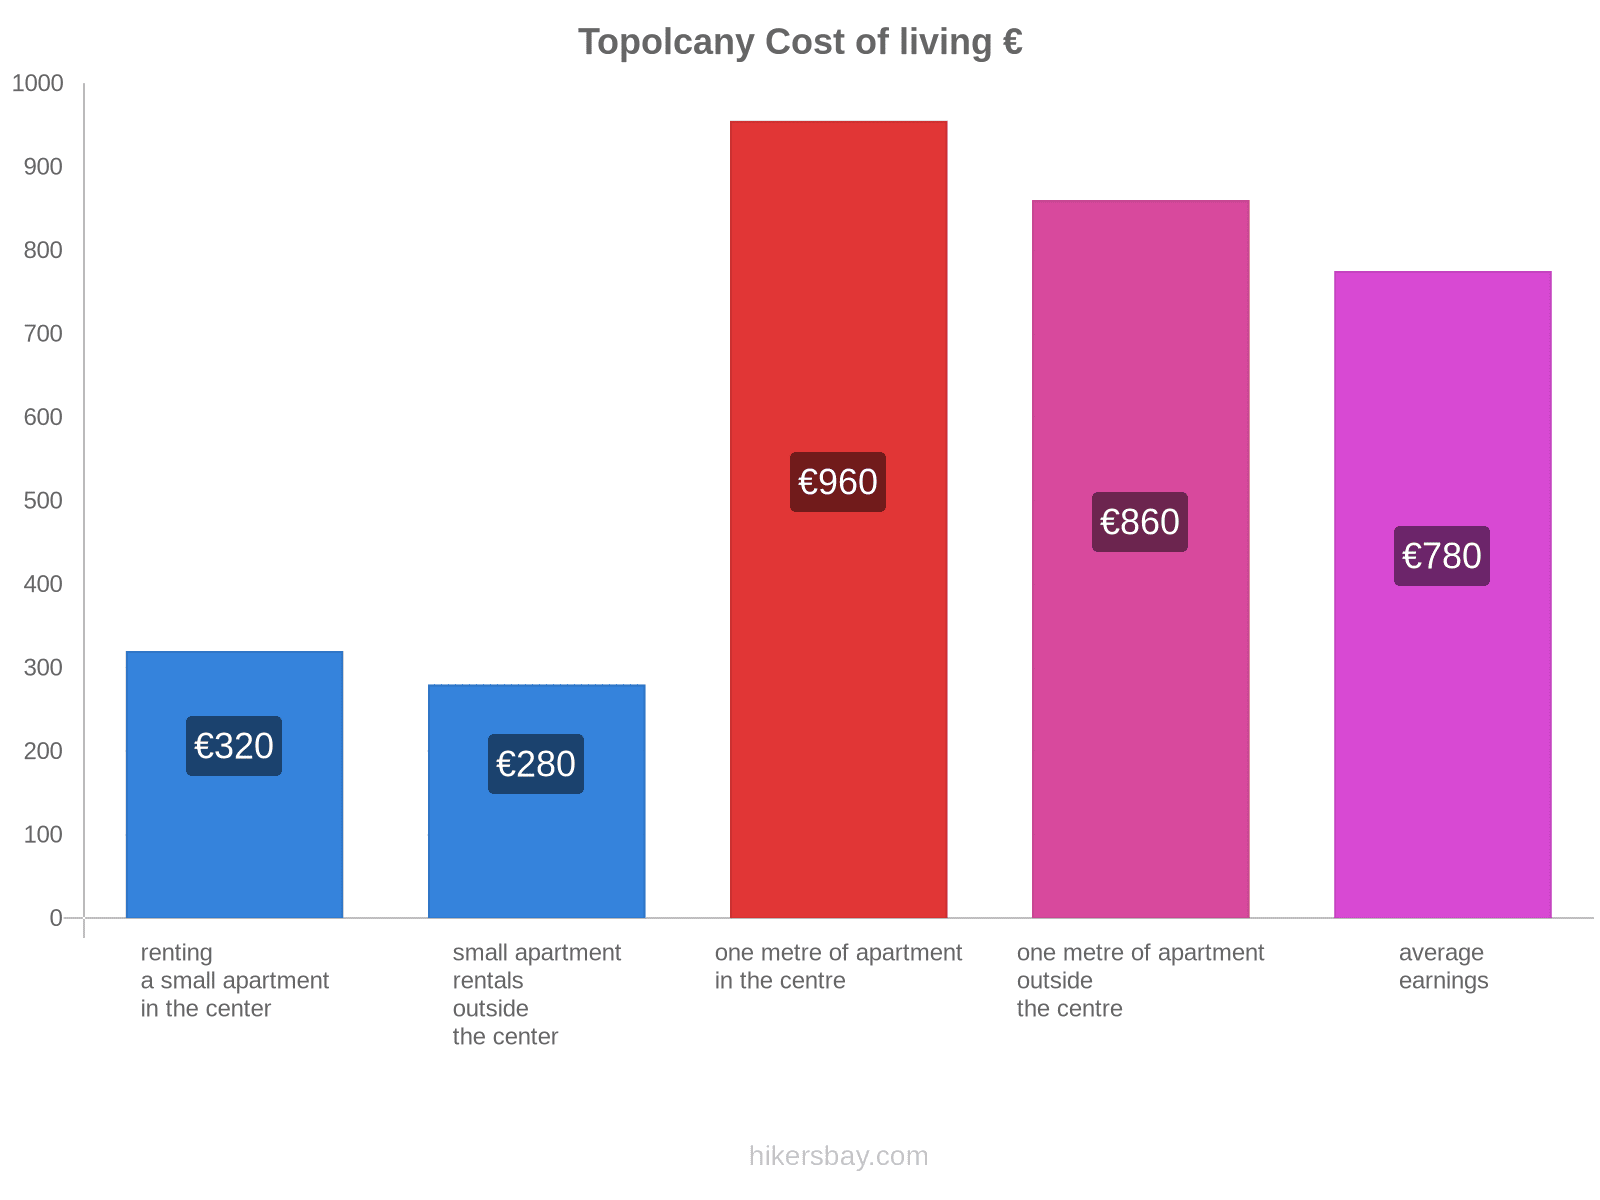 Topolcany cost of living hikersbay.com